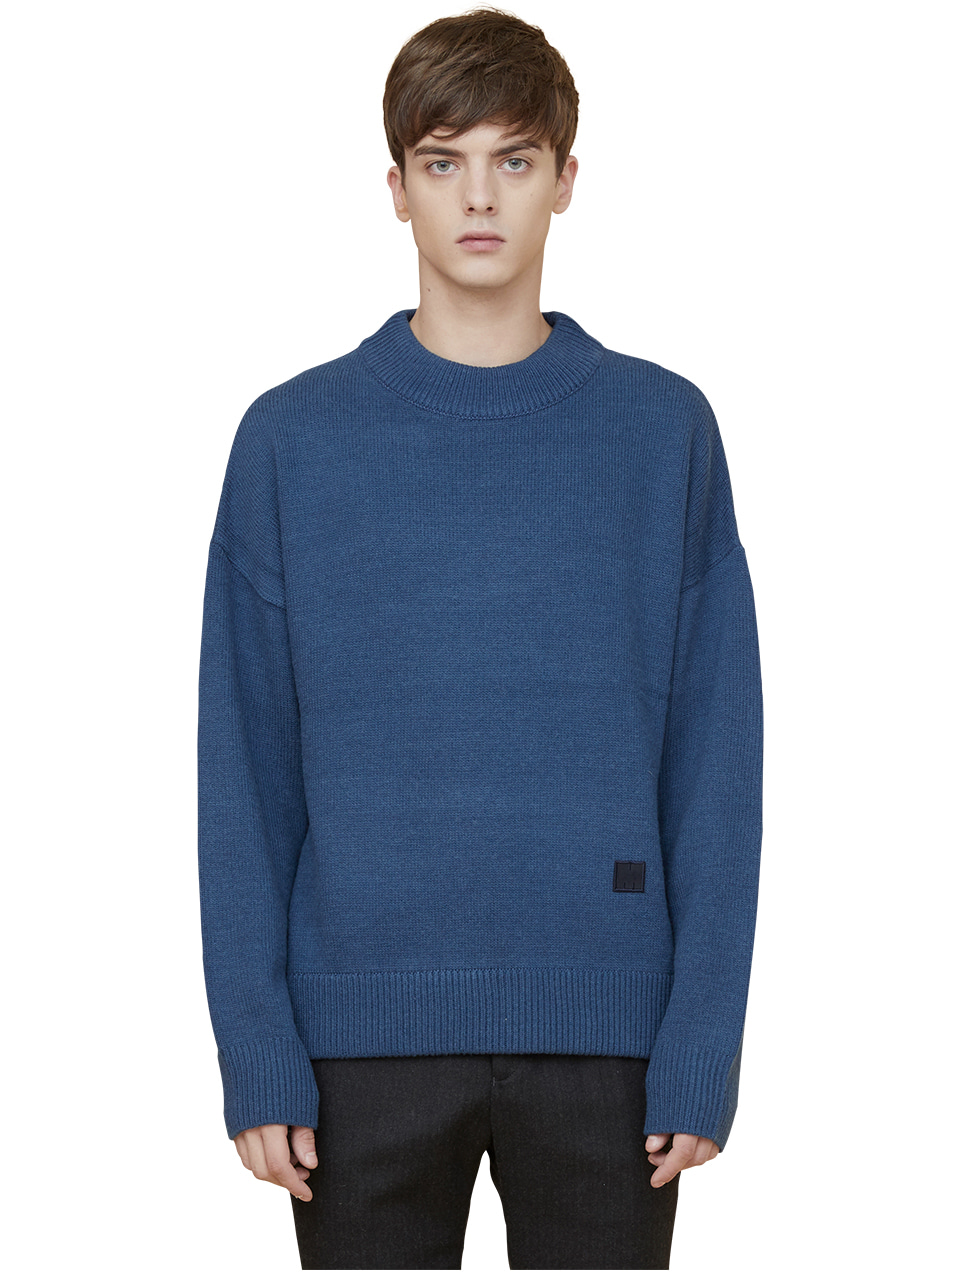 snuggle sweater - blue